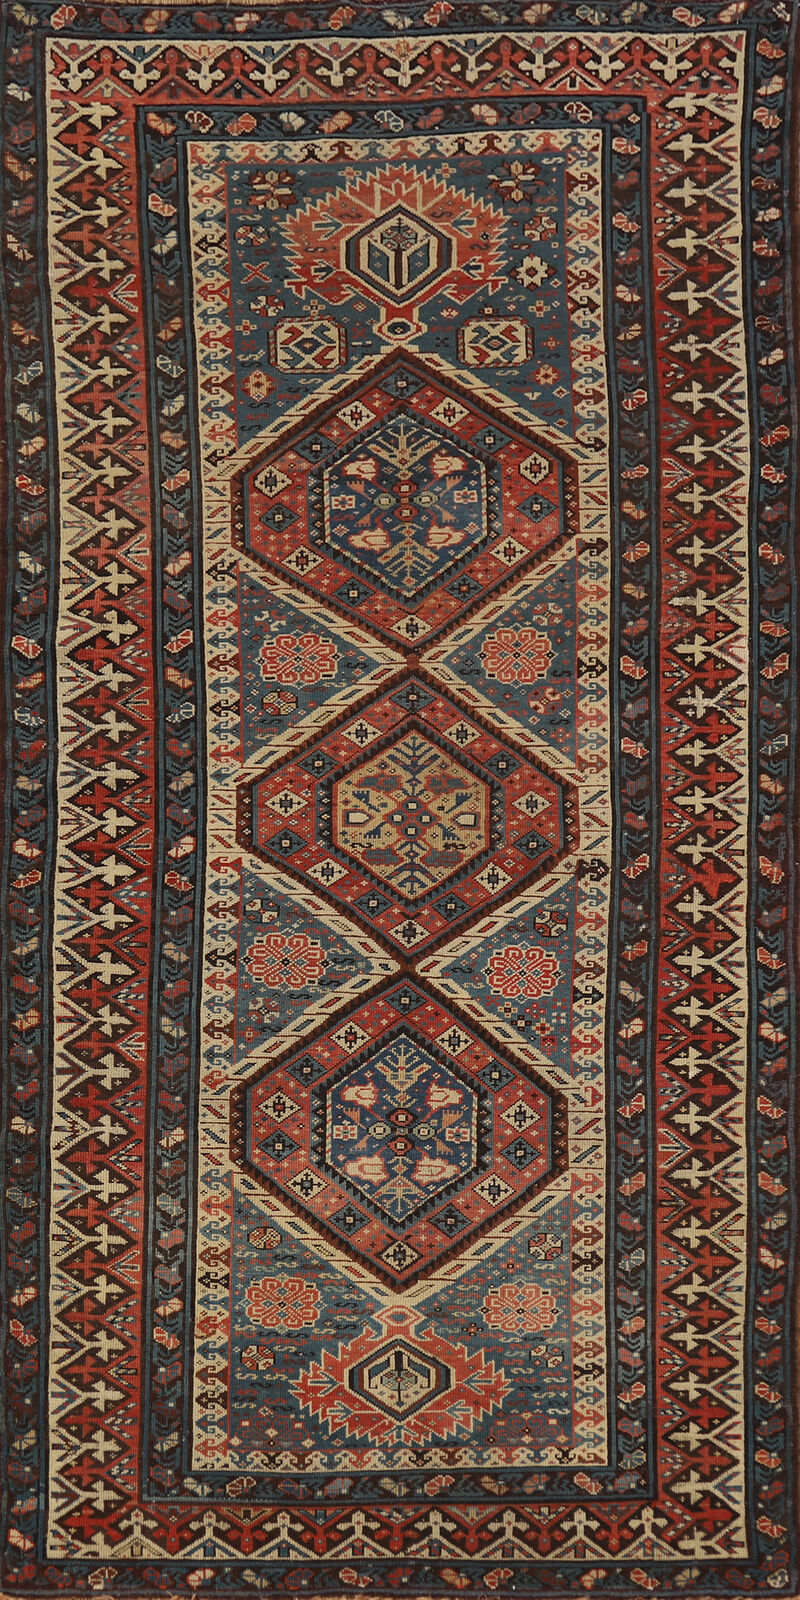 Pre-1900 Antique Vegetable Dye Russian Kazak Area Rug Handmade Wool Carpet 4x8